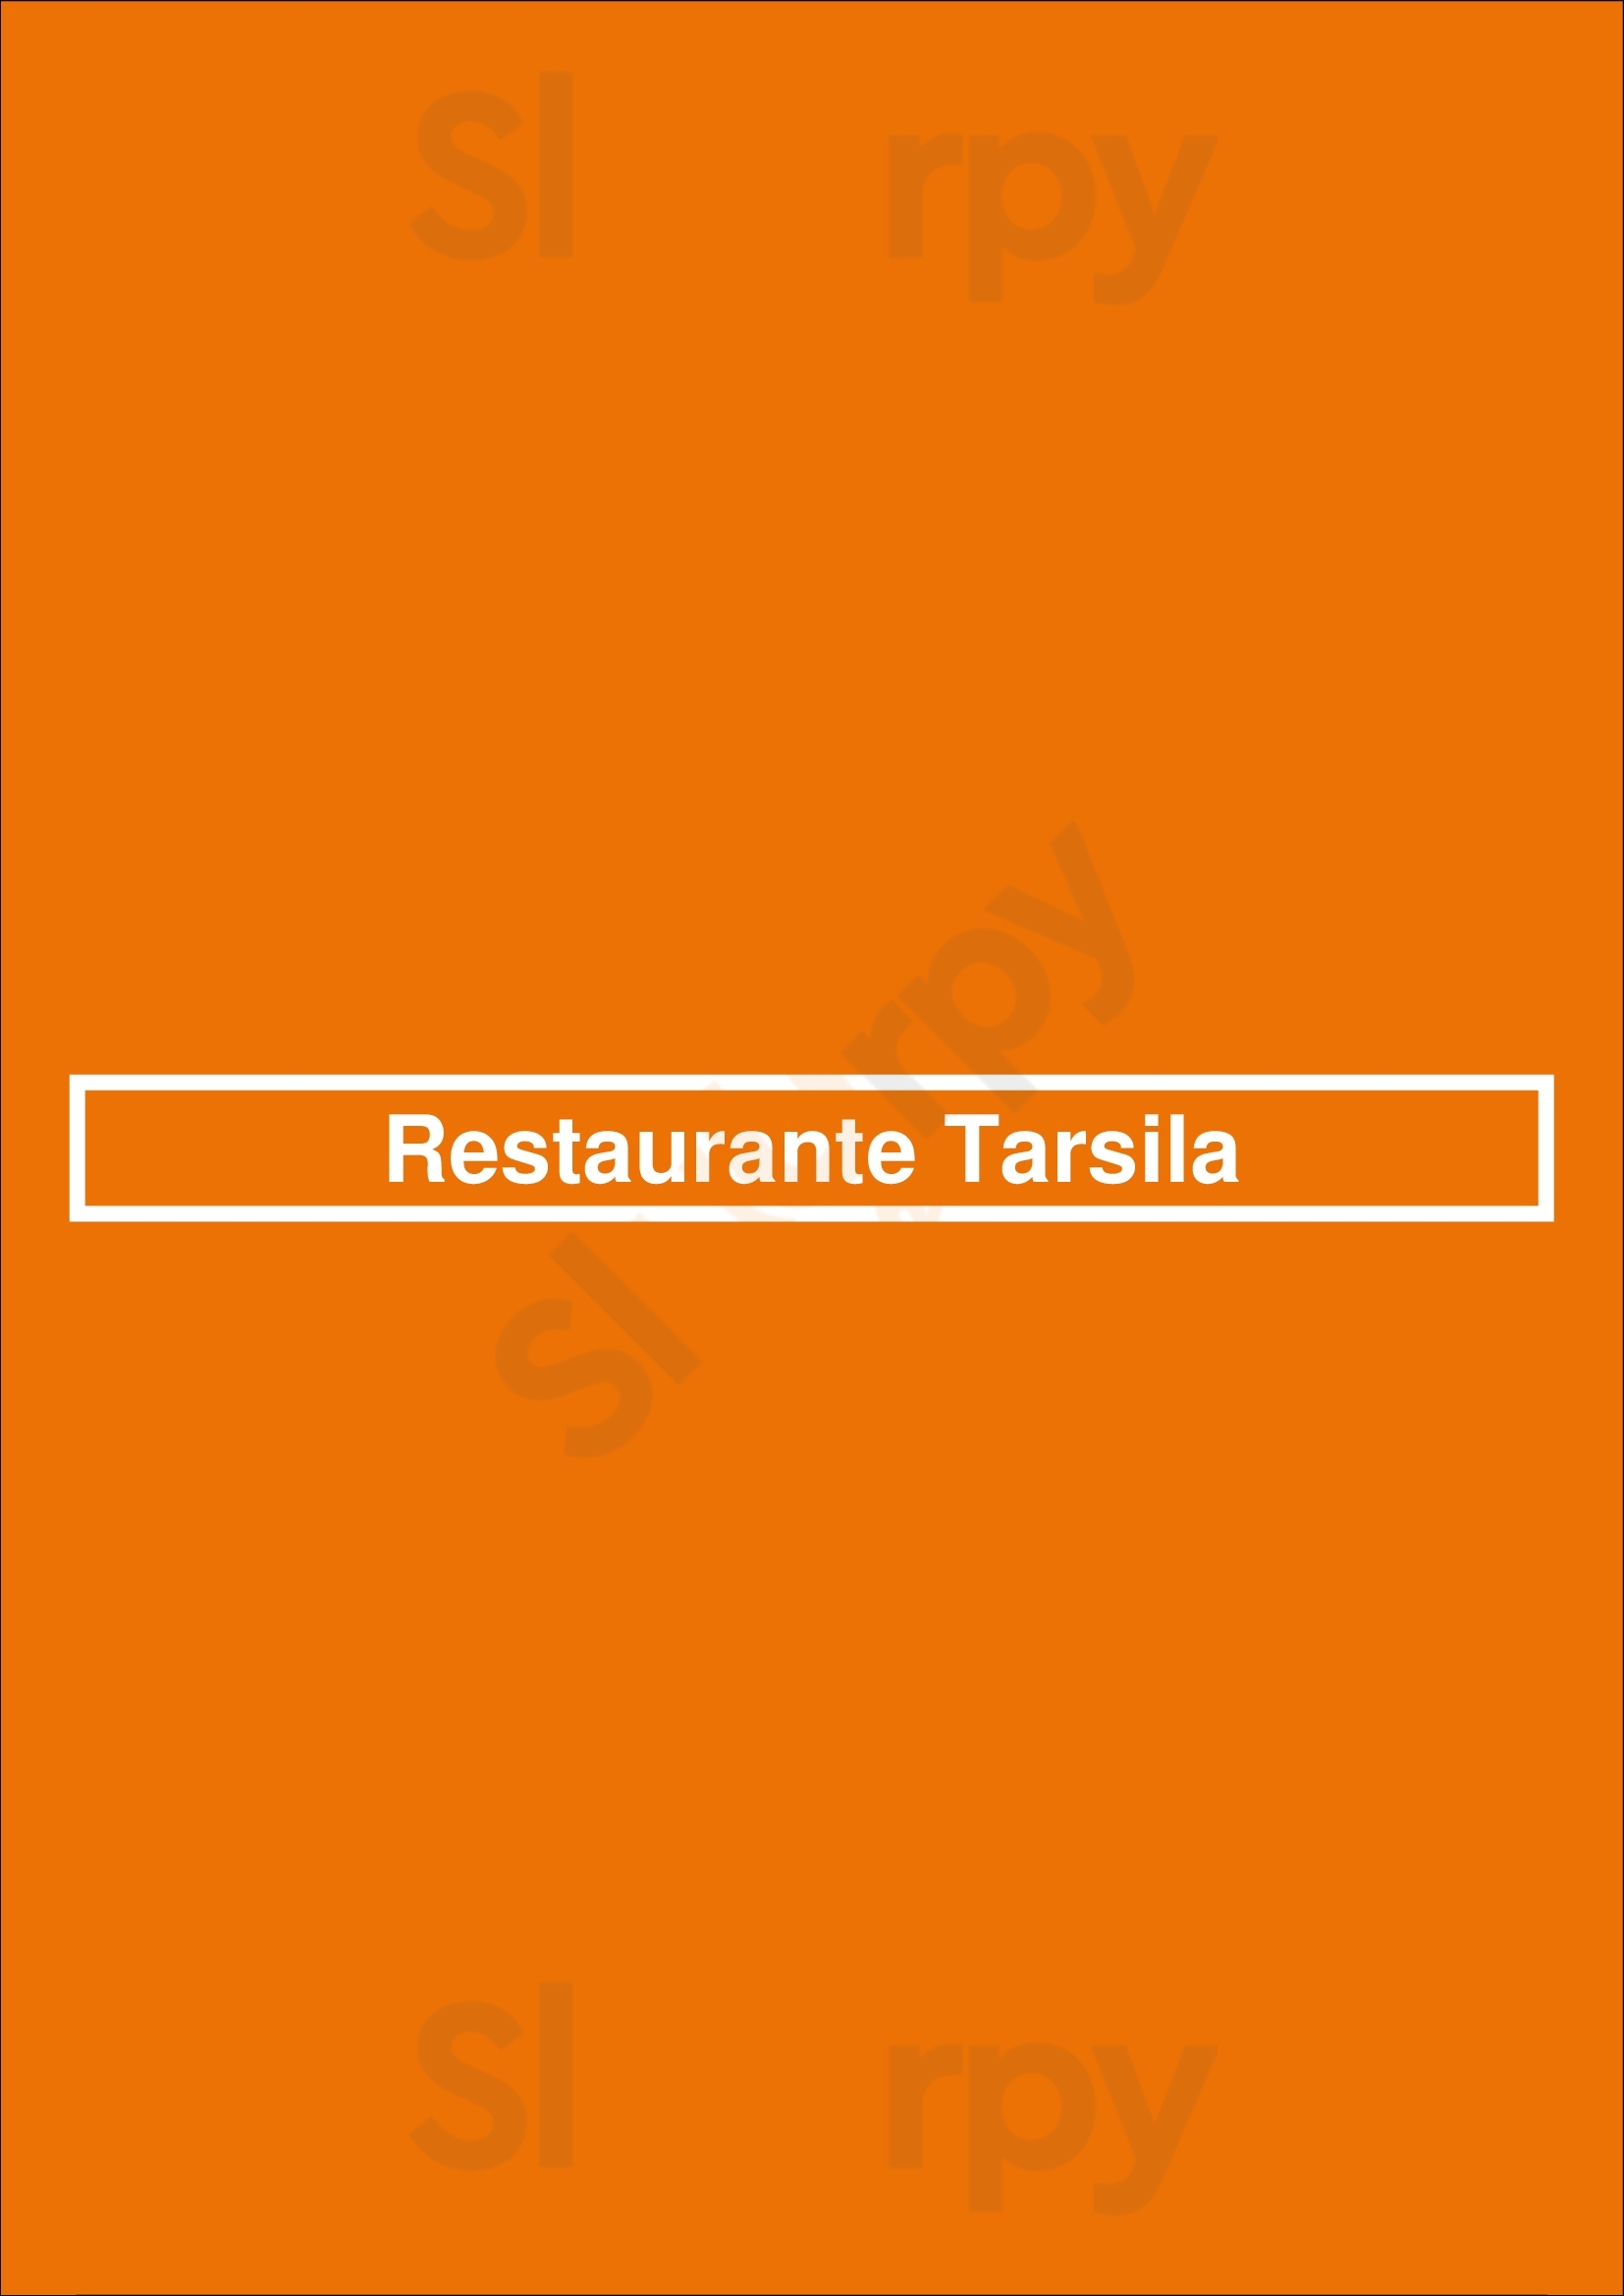 Restaurante Tarsila São Paulo Menu - 1